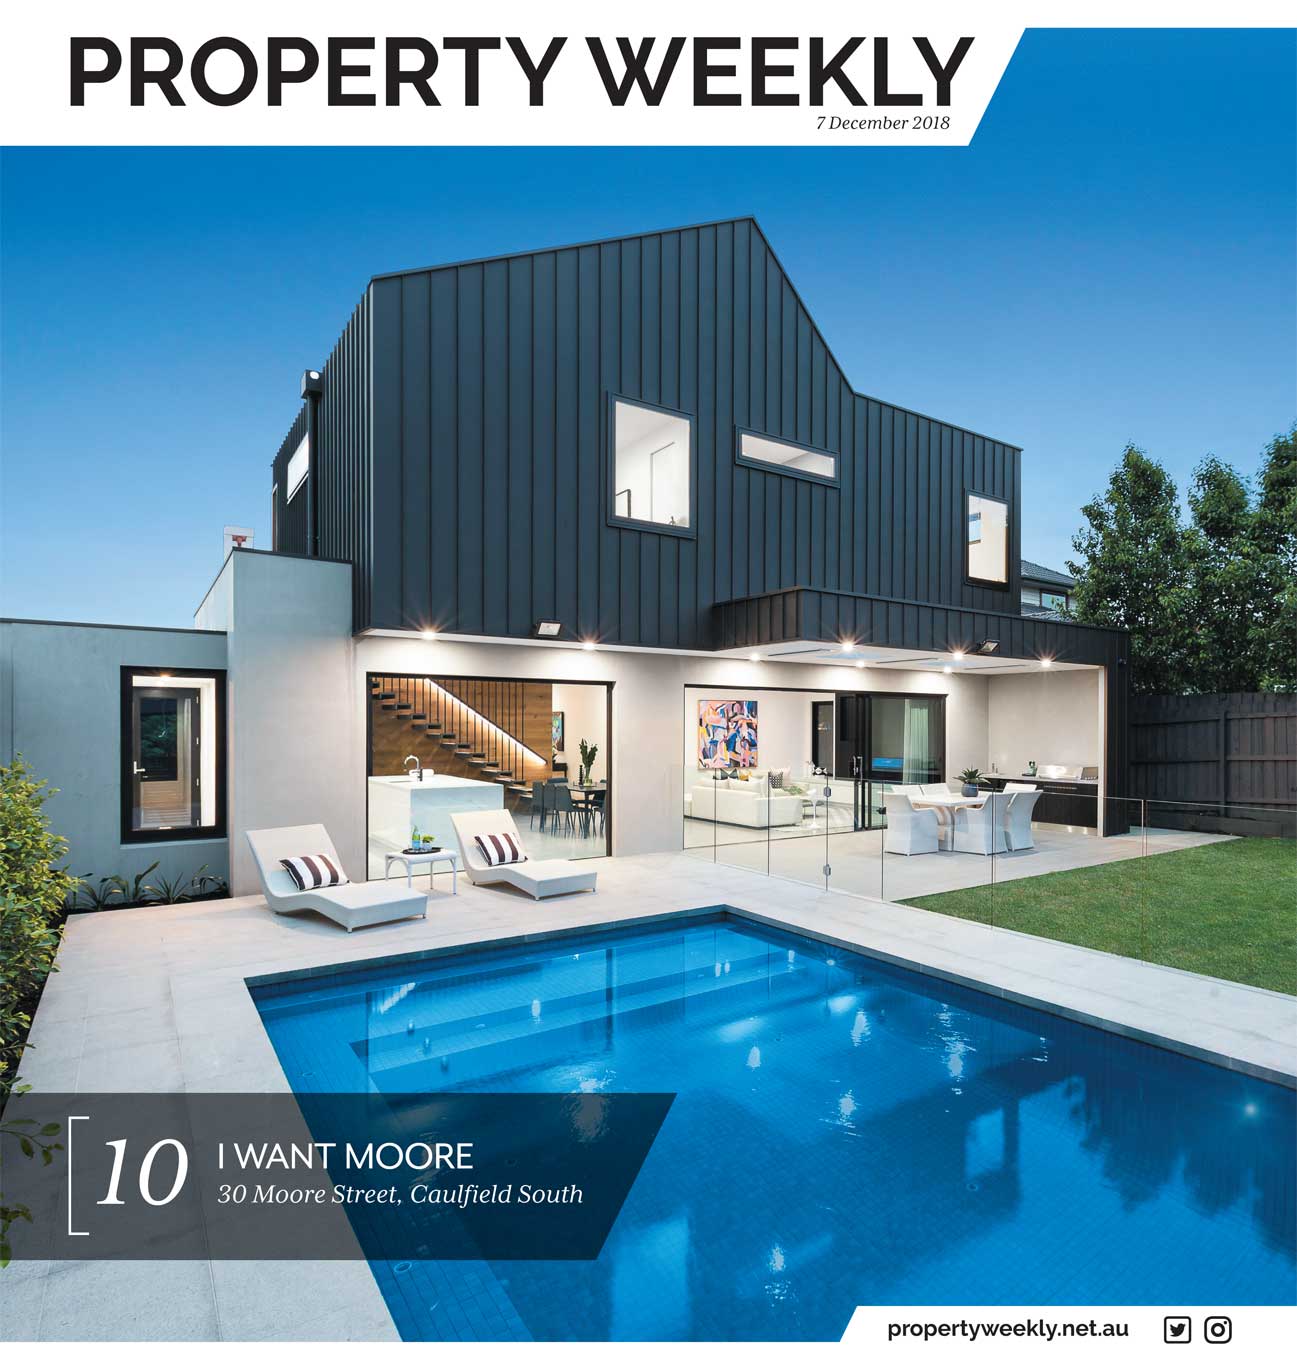 as seen in property weekly